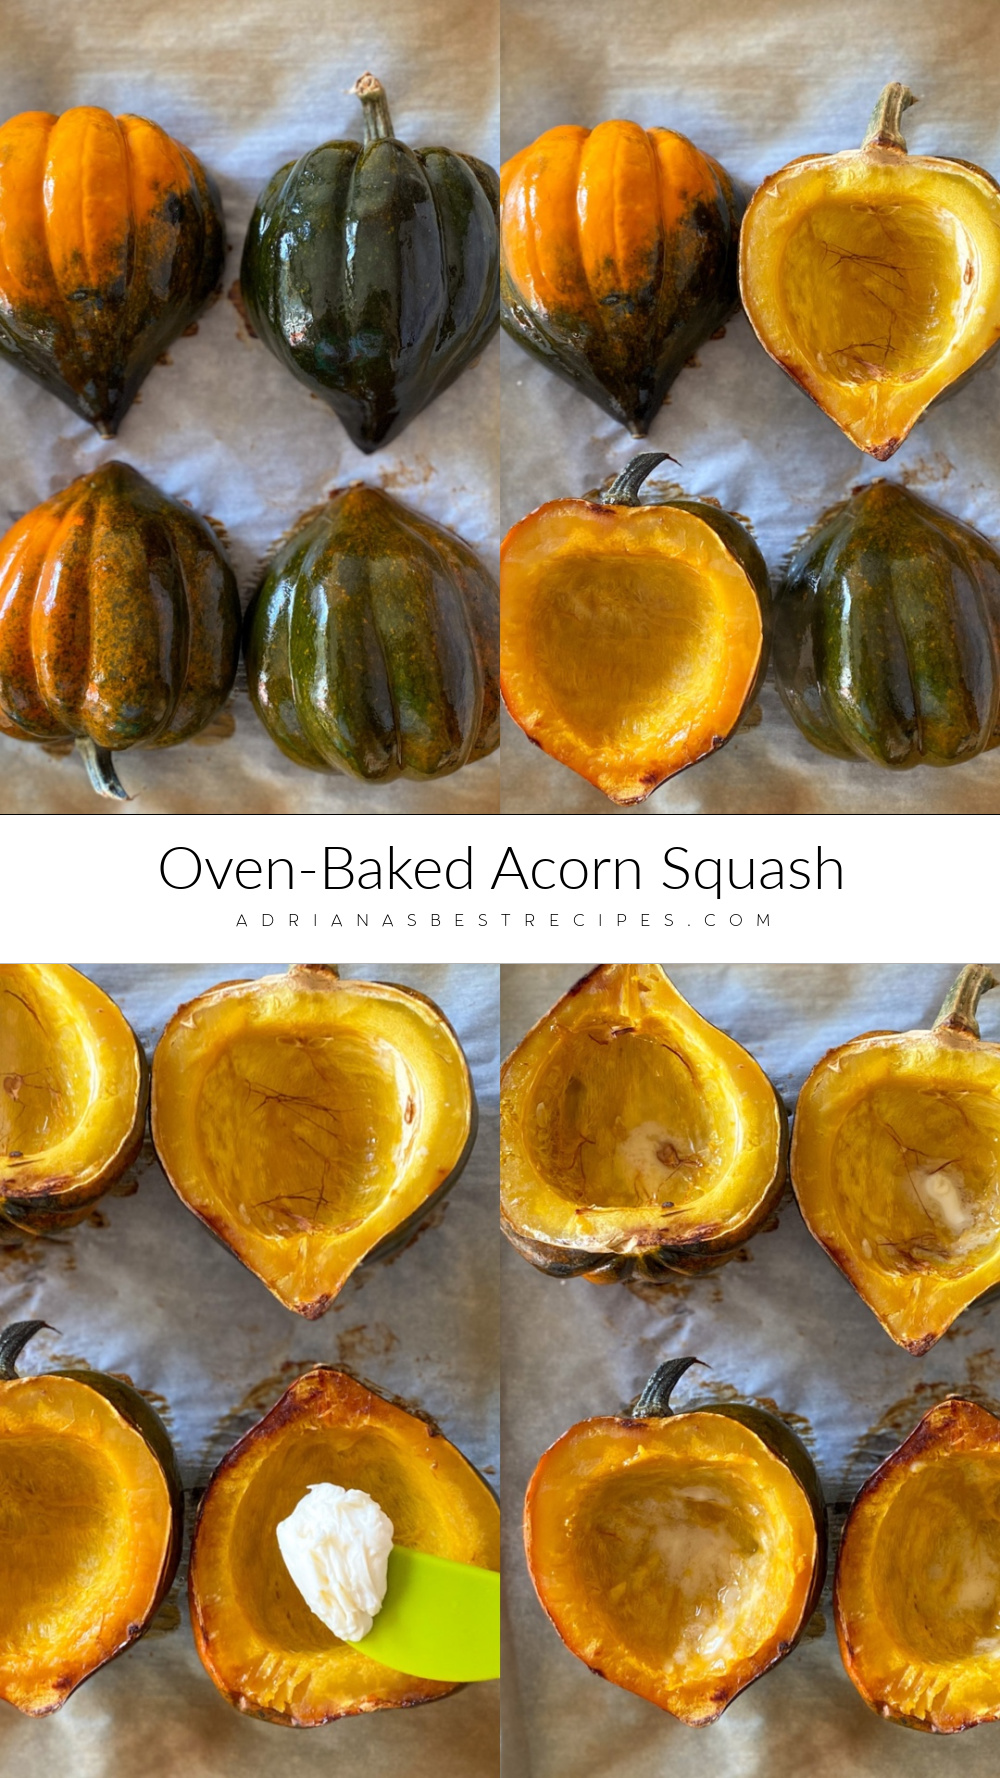 Oven-baked acorn squash